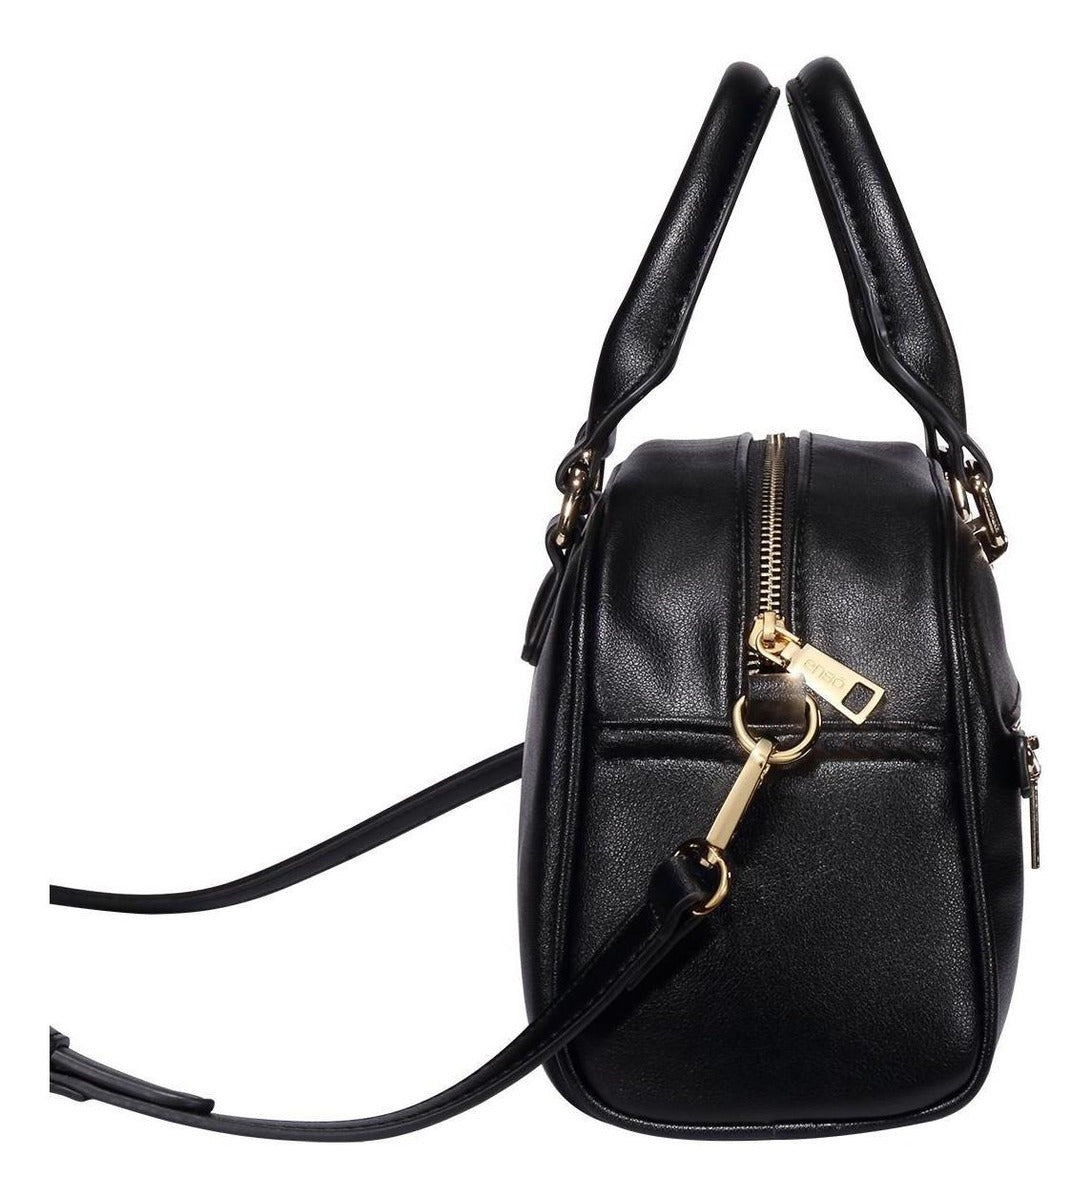 Bolsa de Mano Enso Black Bags EB211HBB Urbana Para Mujer